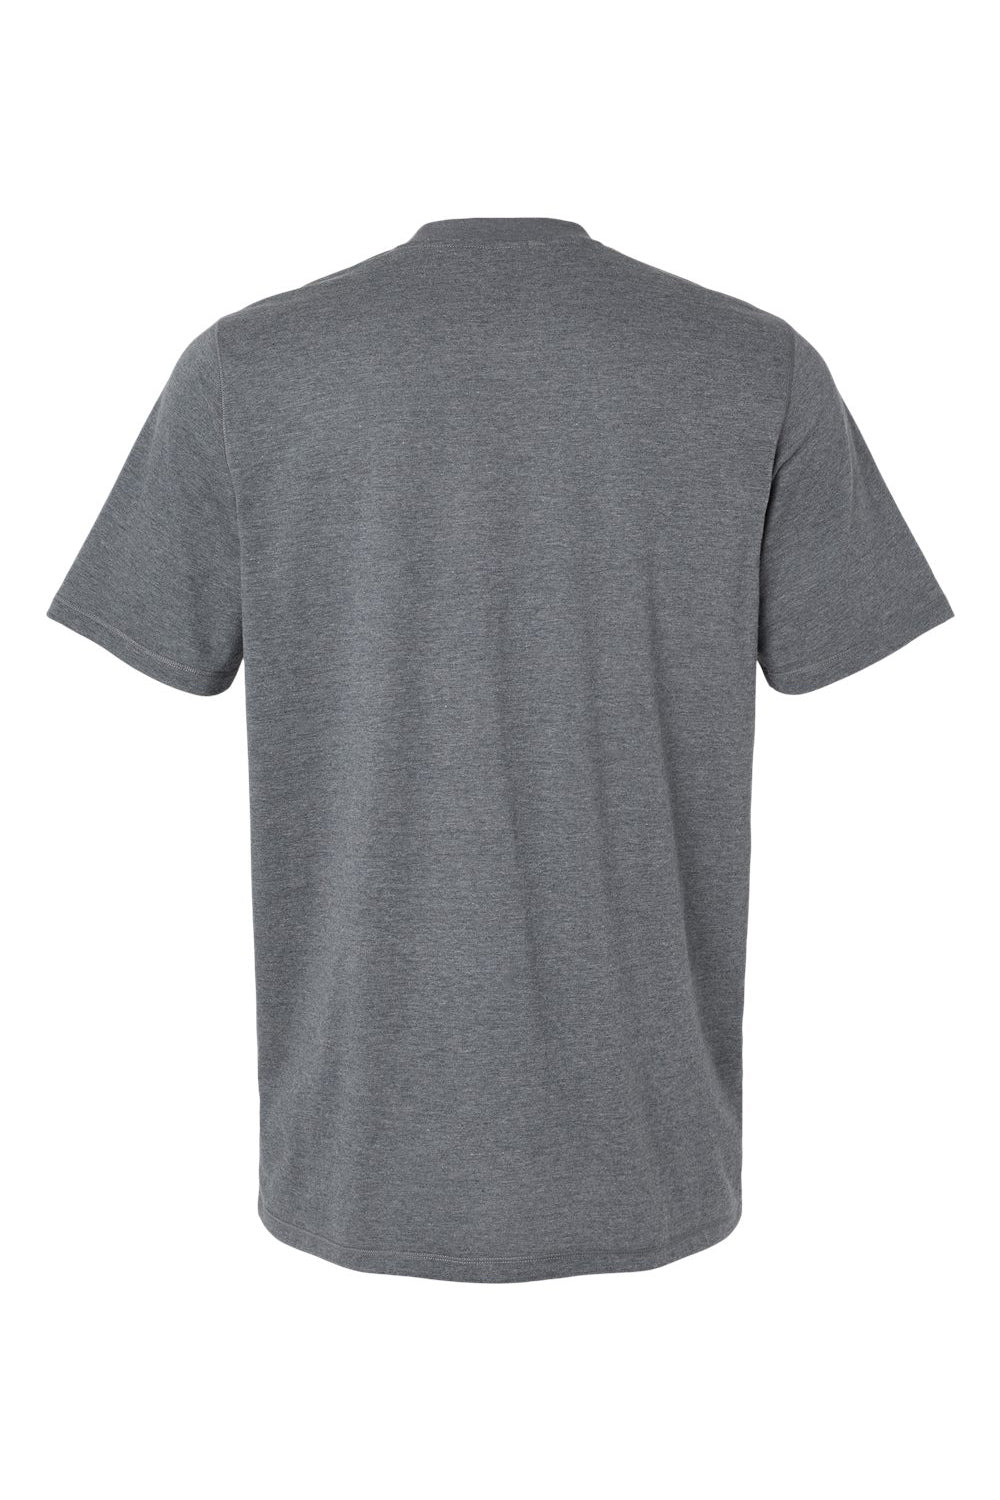 Adidas A556 Mens Short Sleeve Crewneck T-Shirt Heather Dark Grey Flat Back